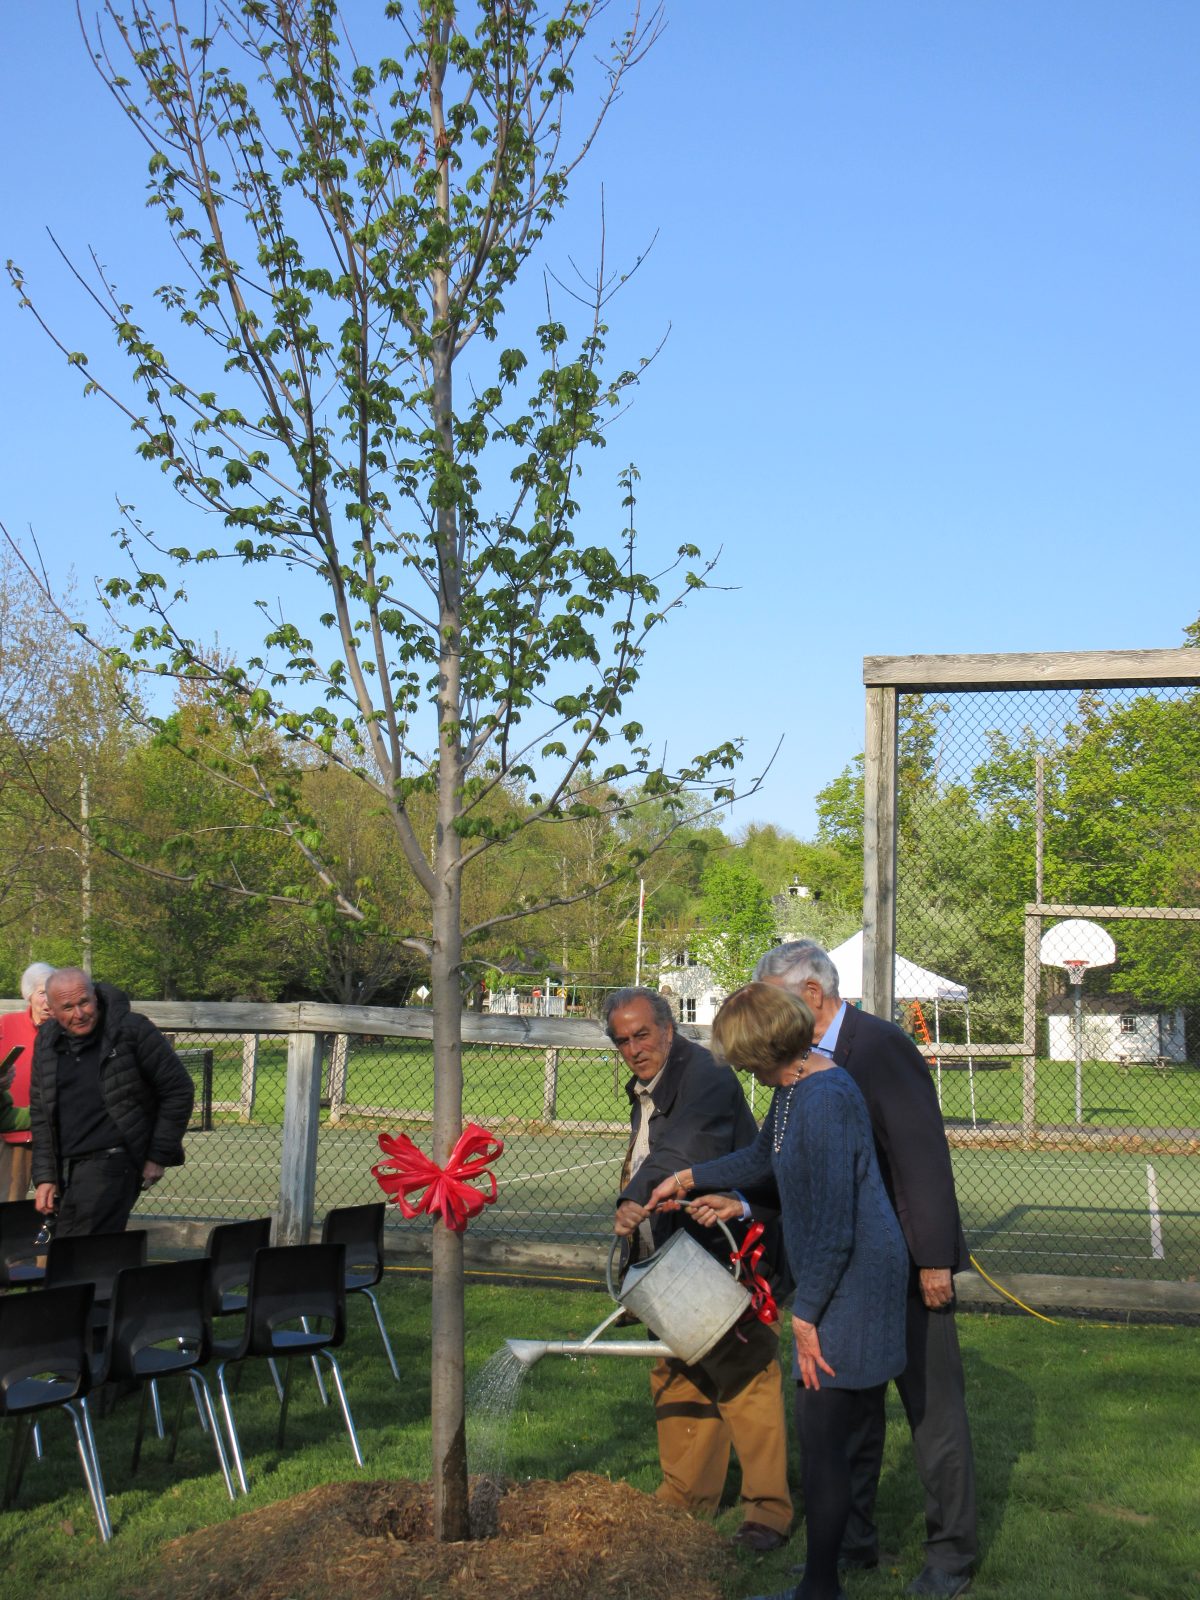 Tree planting ceremony honours Molson Island donation to conservancy